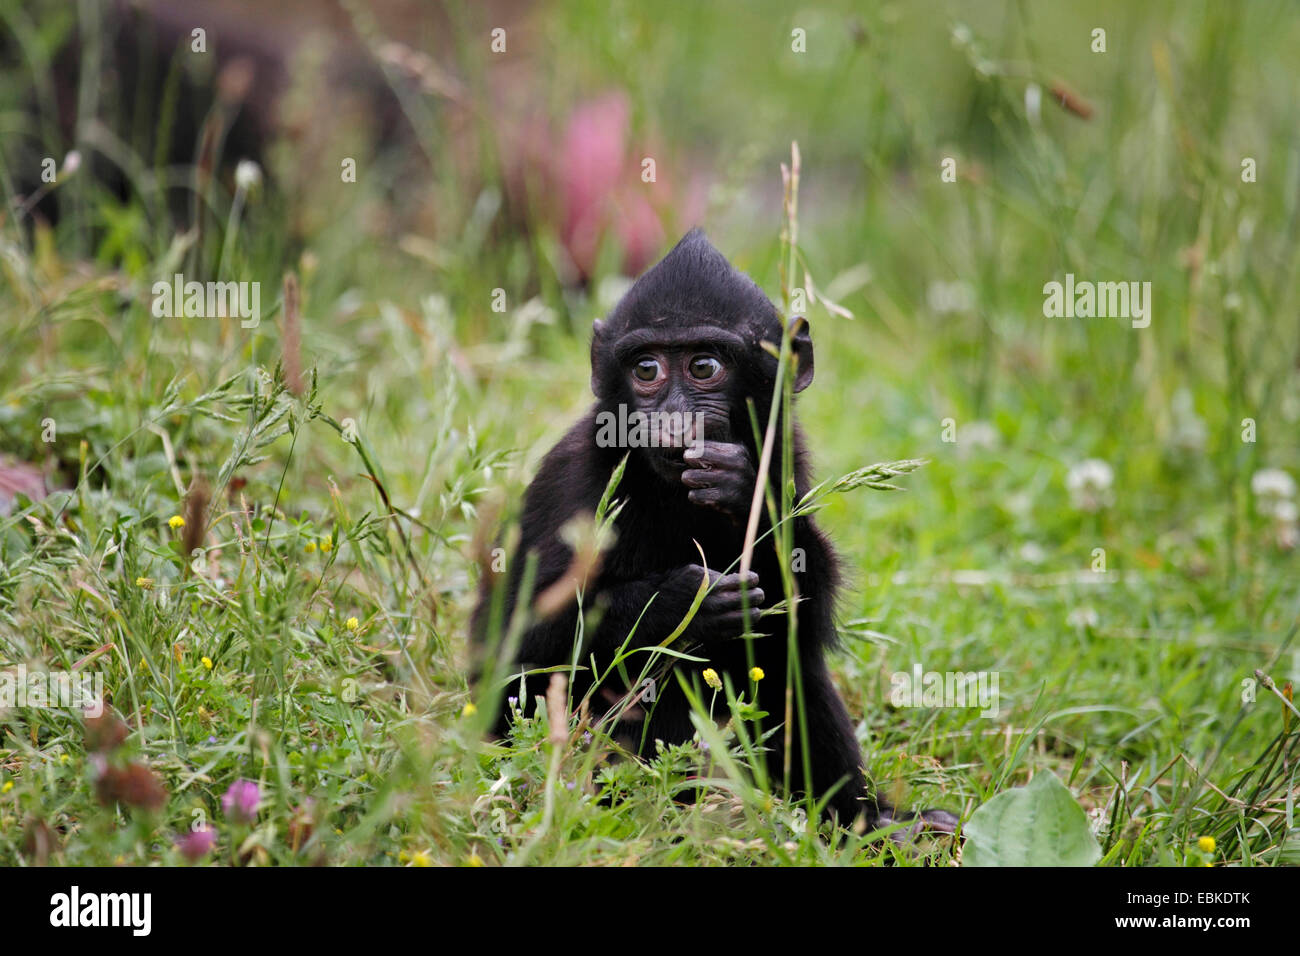 Celebes ape, Celebes black ape (Macaca nigra), young animal sitting on grass Stock Photo